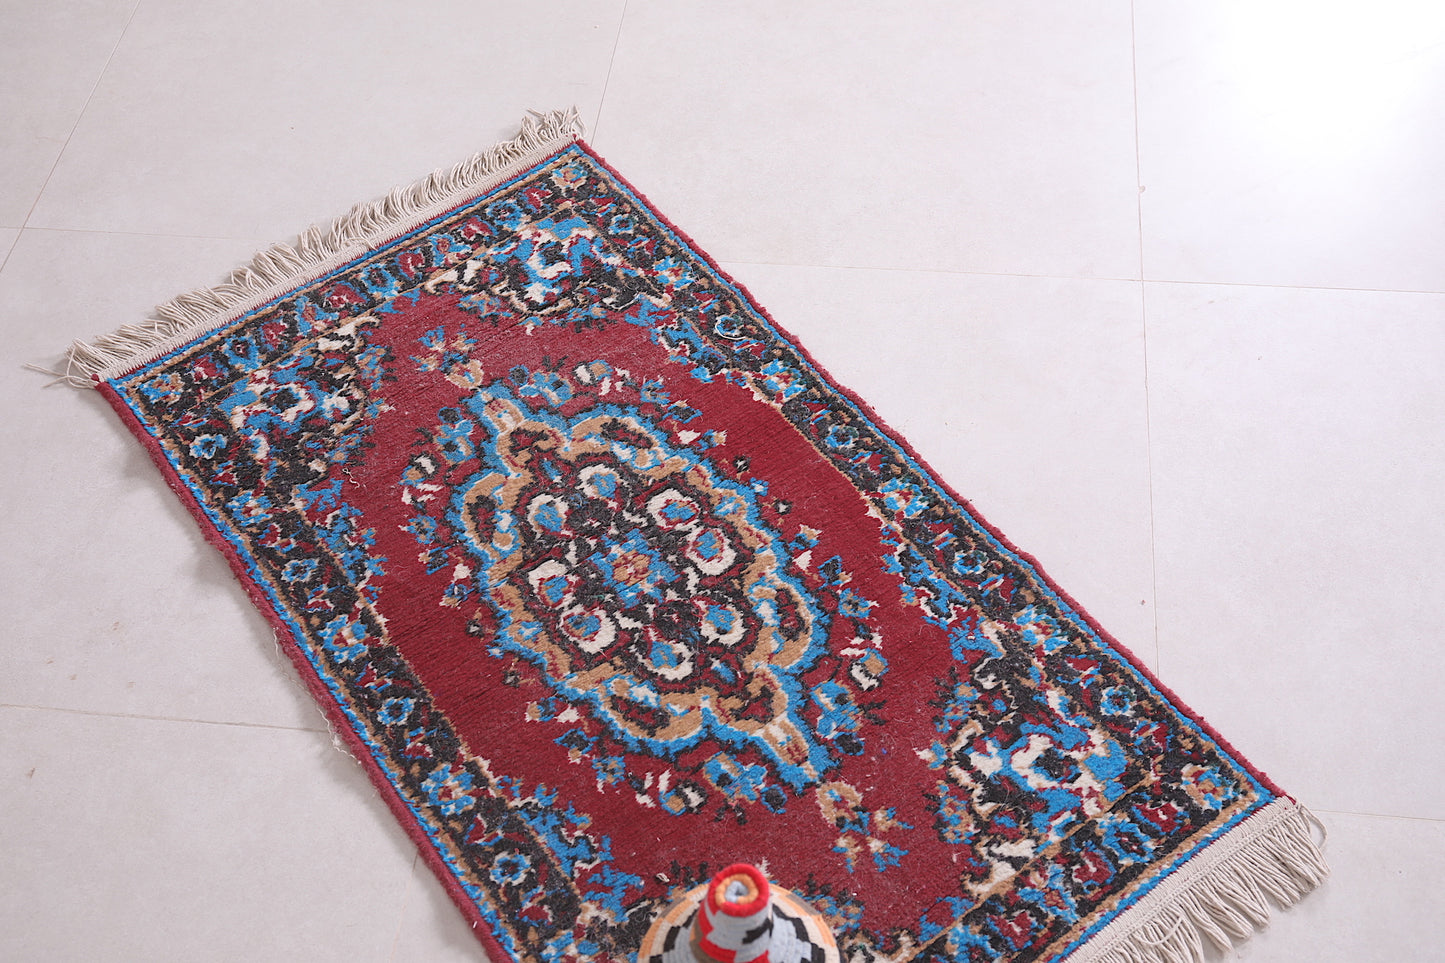 Small Moroccan rug 1.9 X 3.5 Feet